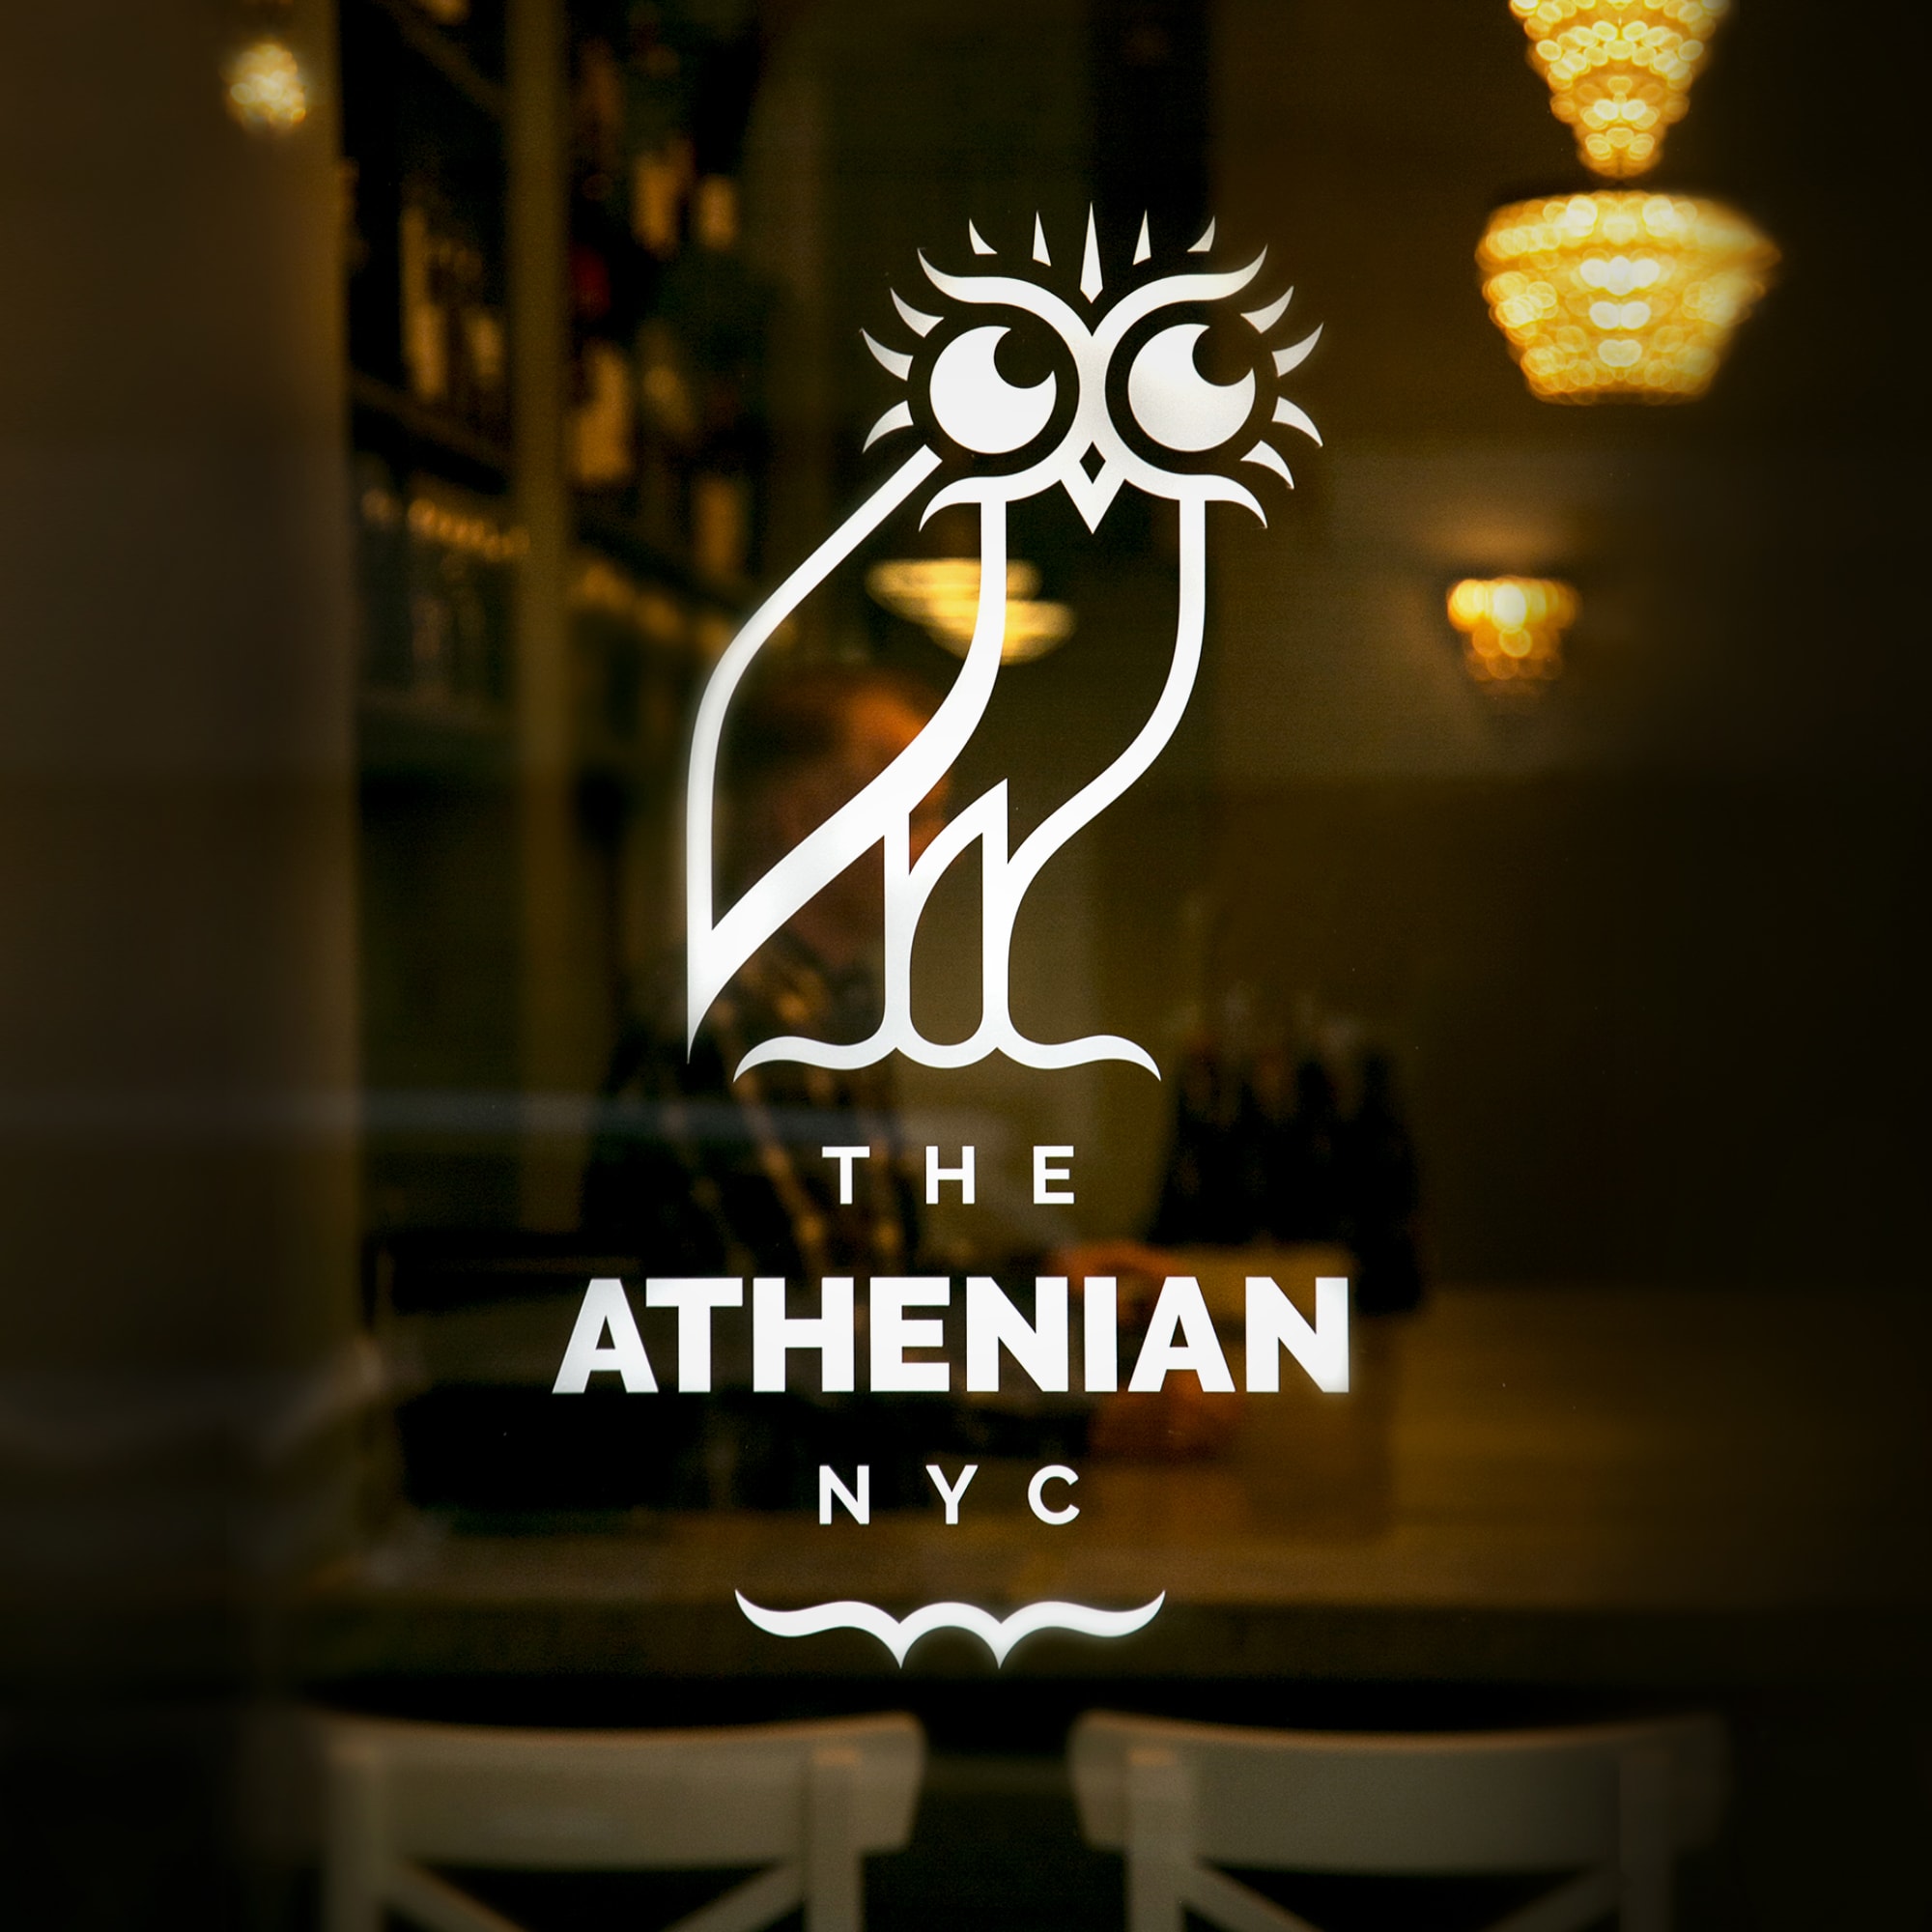 The Athenian NYC logo branding identity design by Maximillian Piras